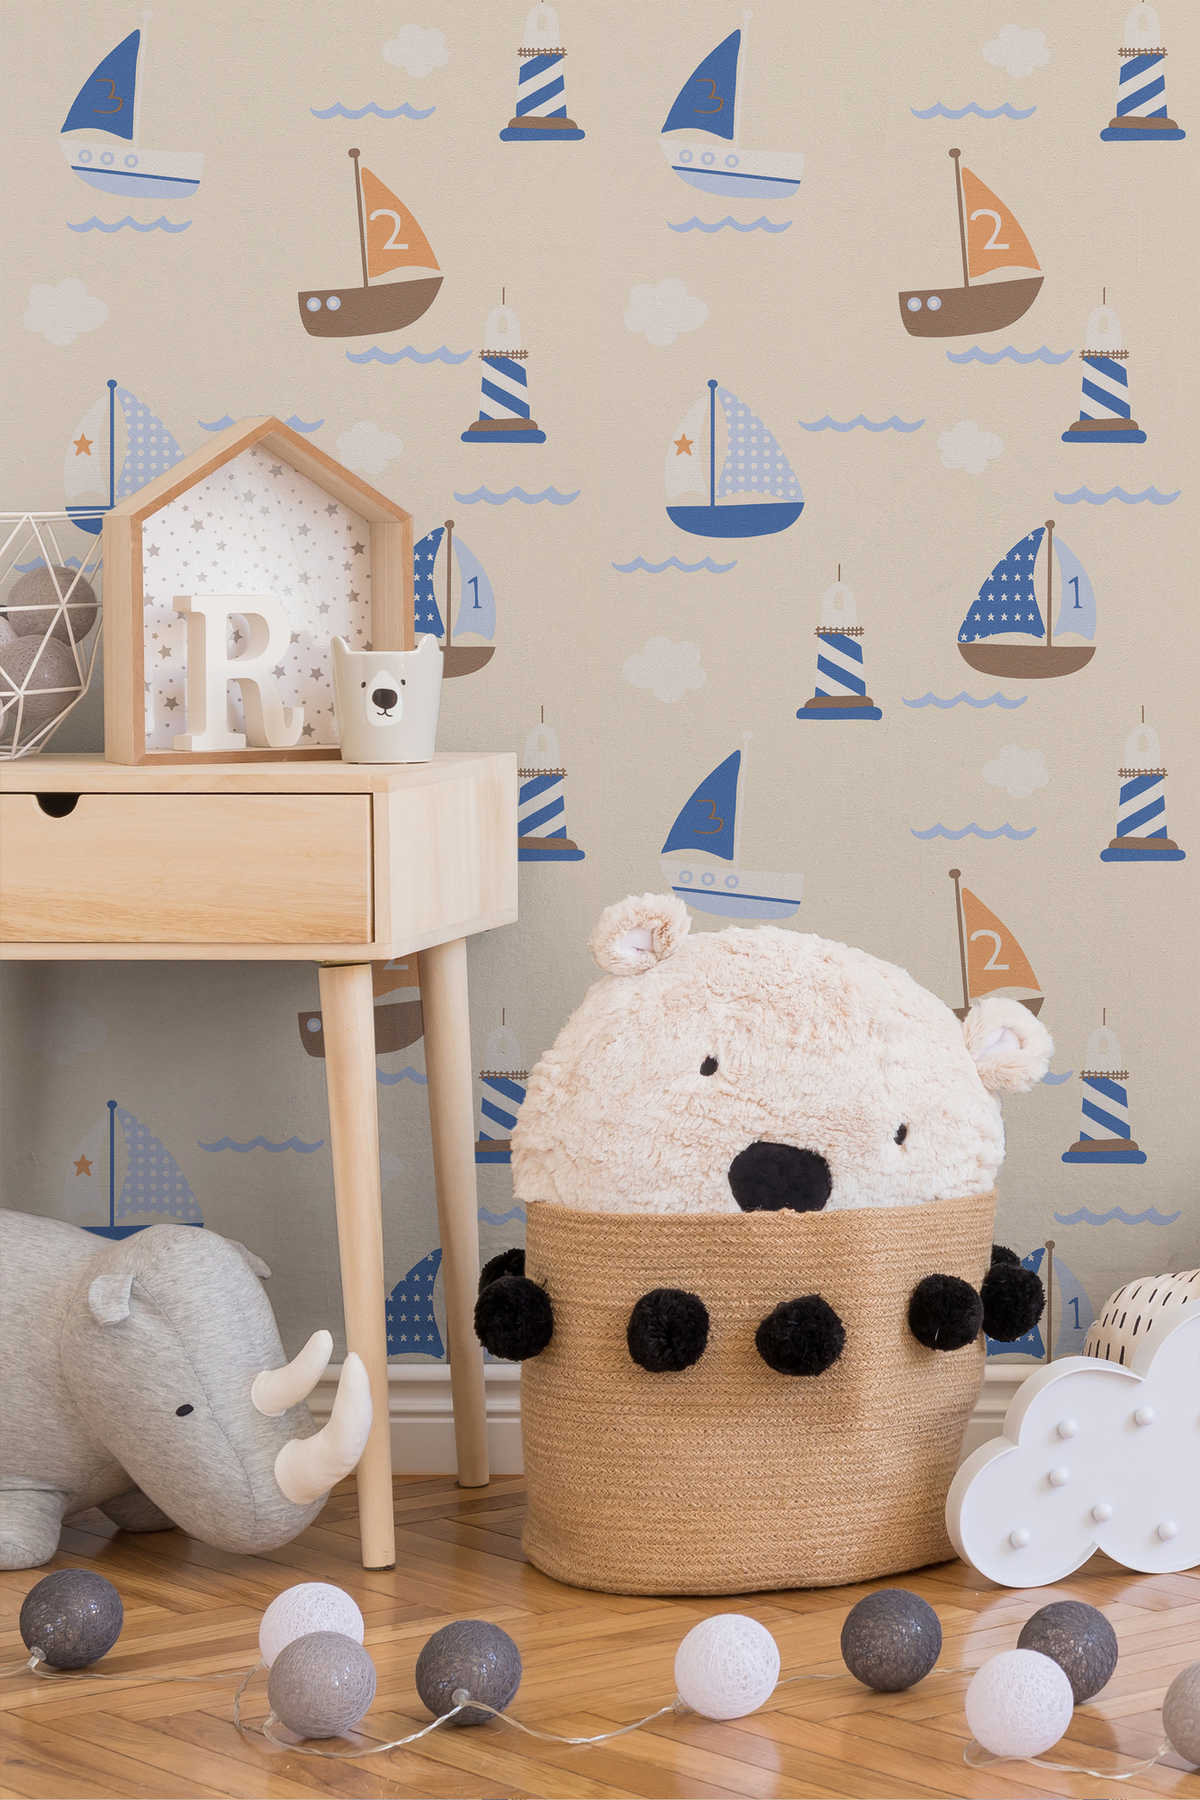             Kids room wallpaper with ship, boat & lighthouse - blue, beige
        